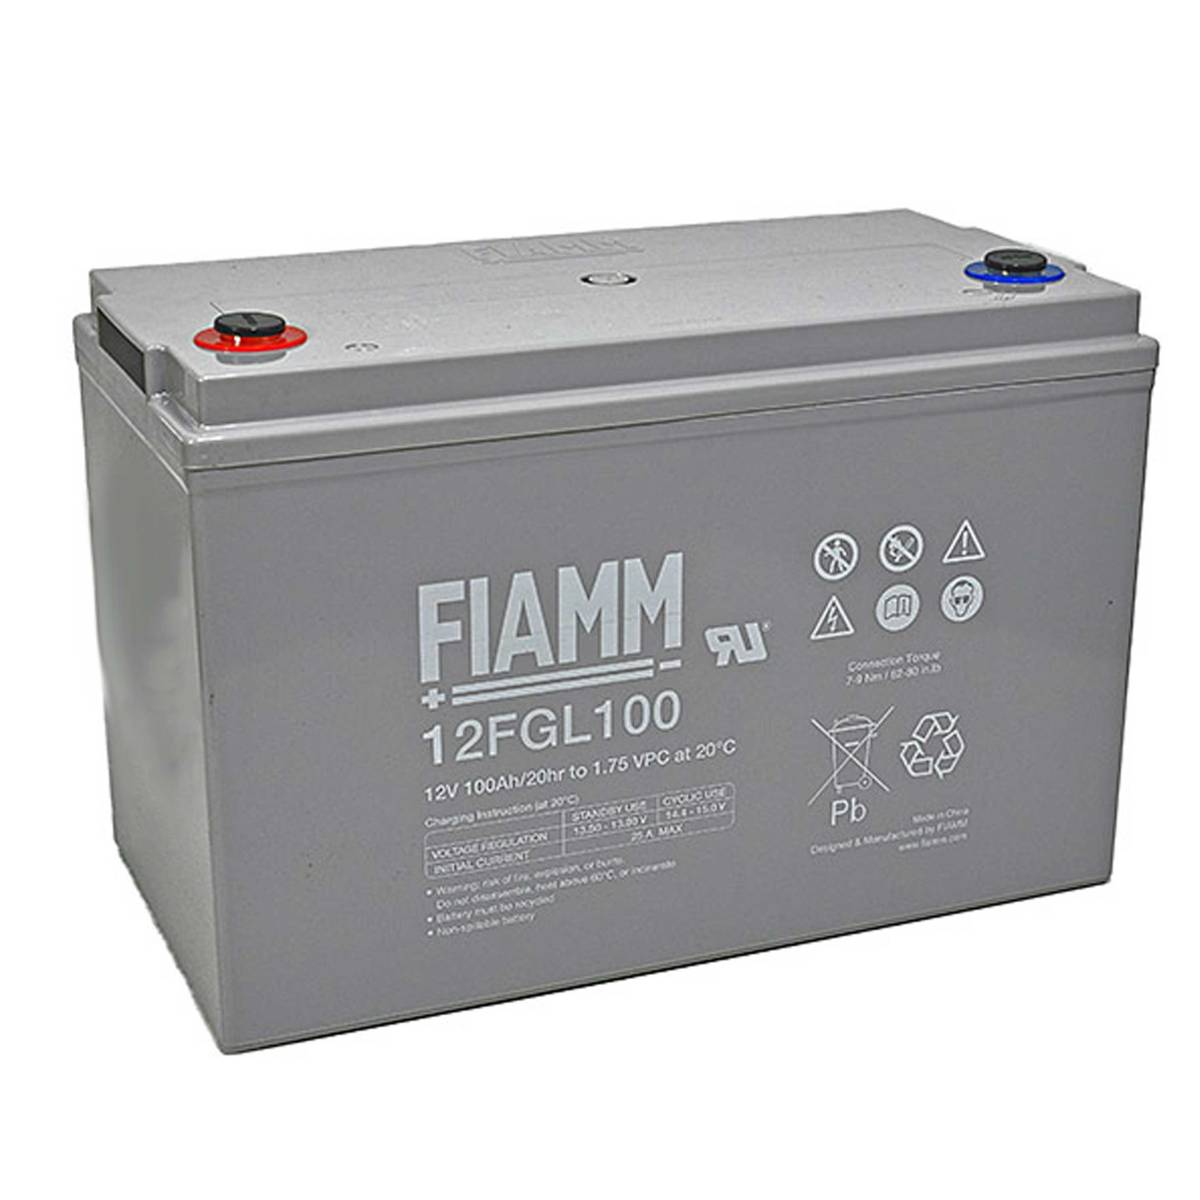 Fiamm 12FGL100 12V 100Ah batteria piombo-acido / AGM